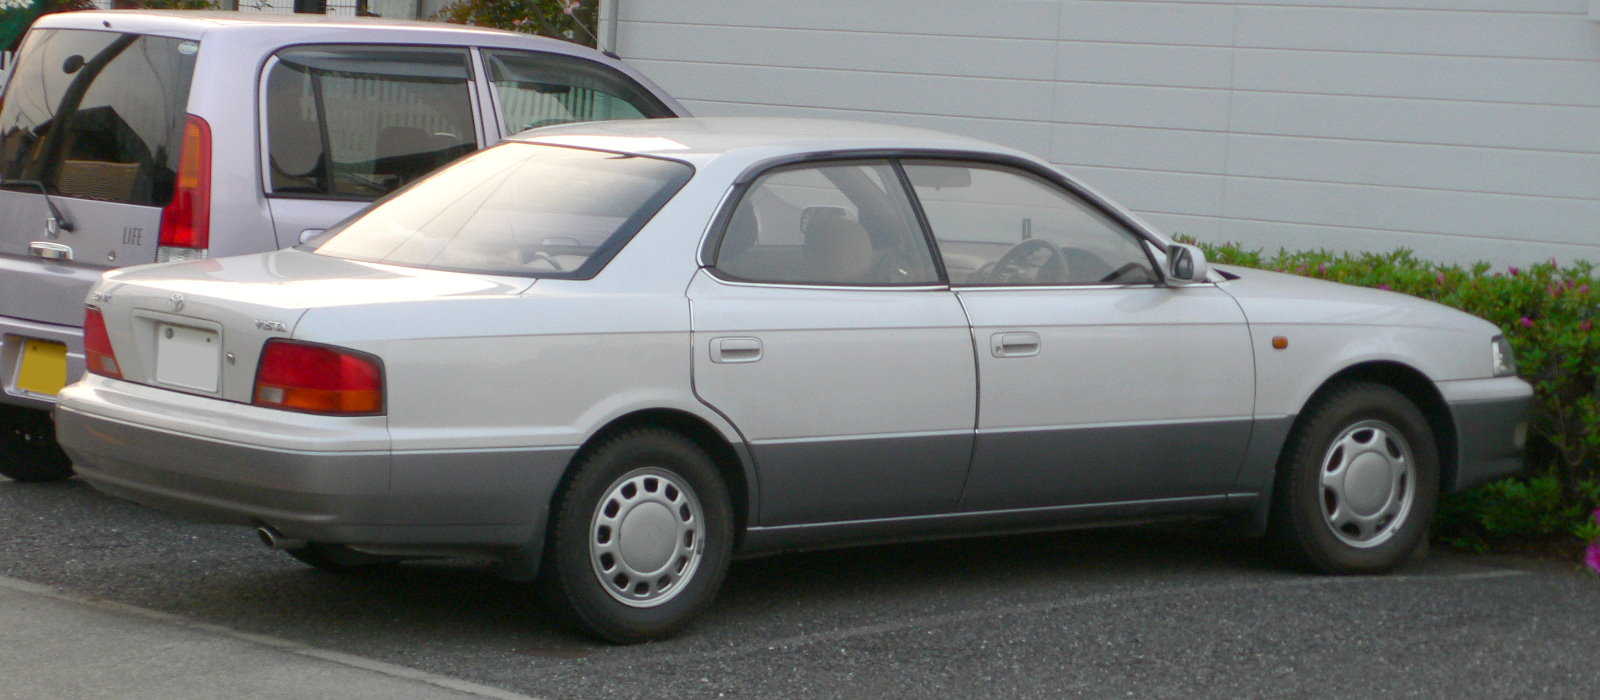 Toyota Vista 1996 Photo - 1